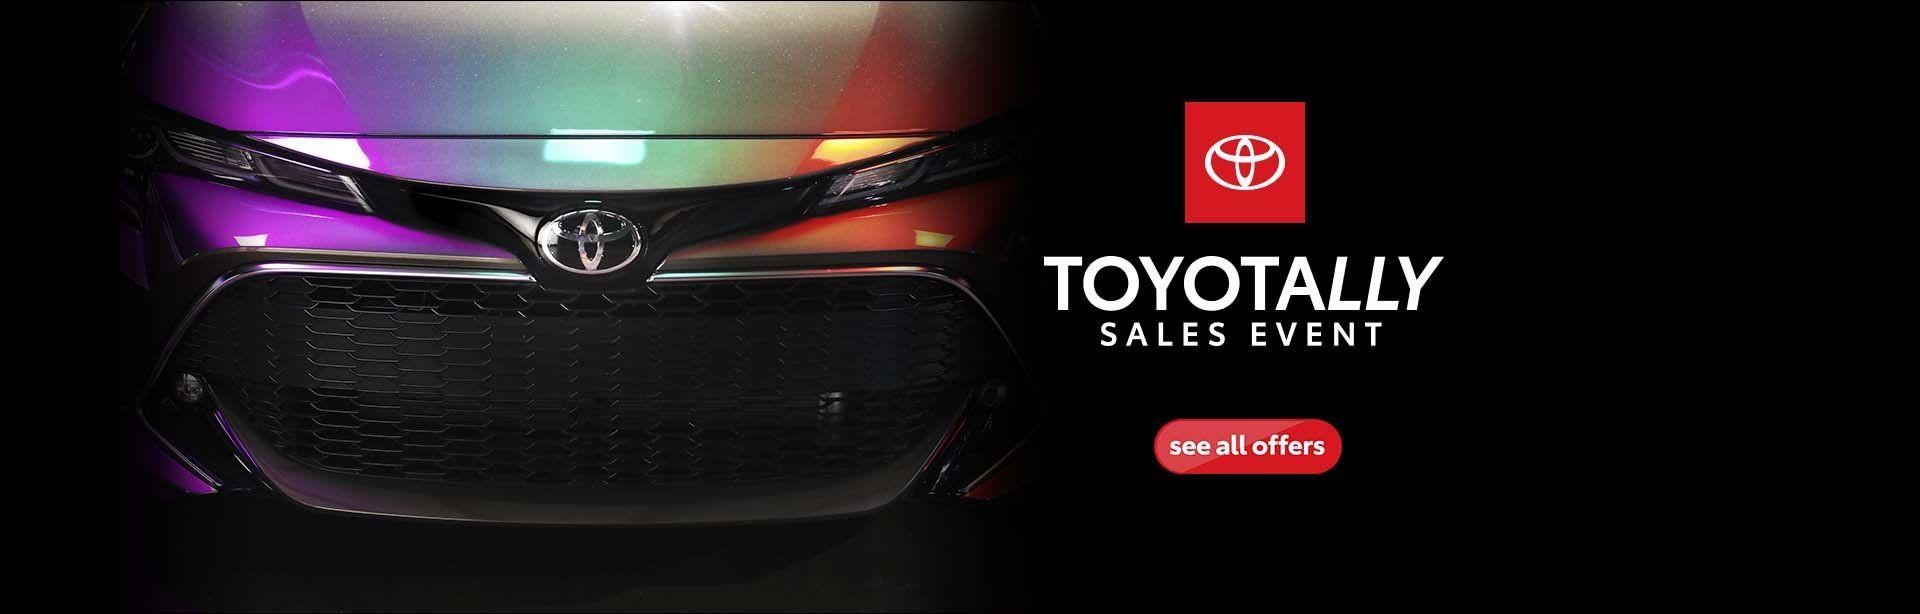 Symes Automotive Logo - Toyota Dealership Pasadena CA. Used Cars Toyota Pasadena